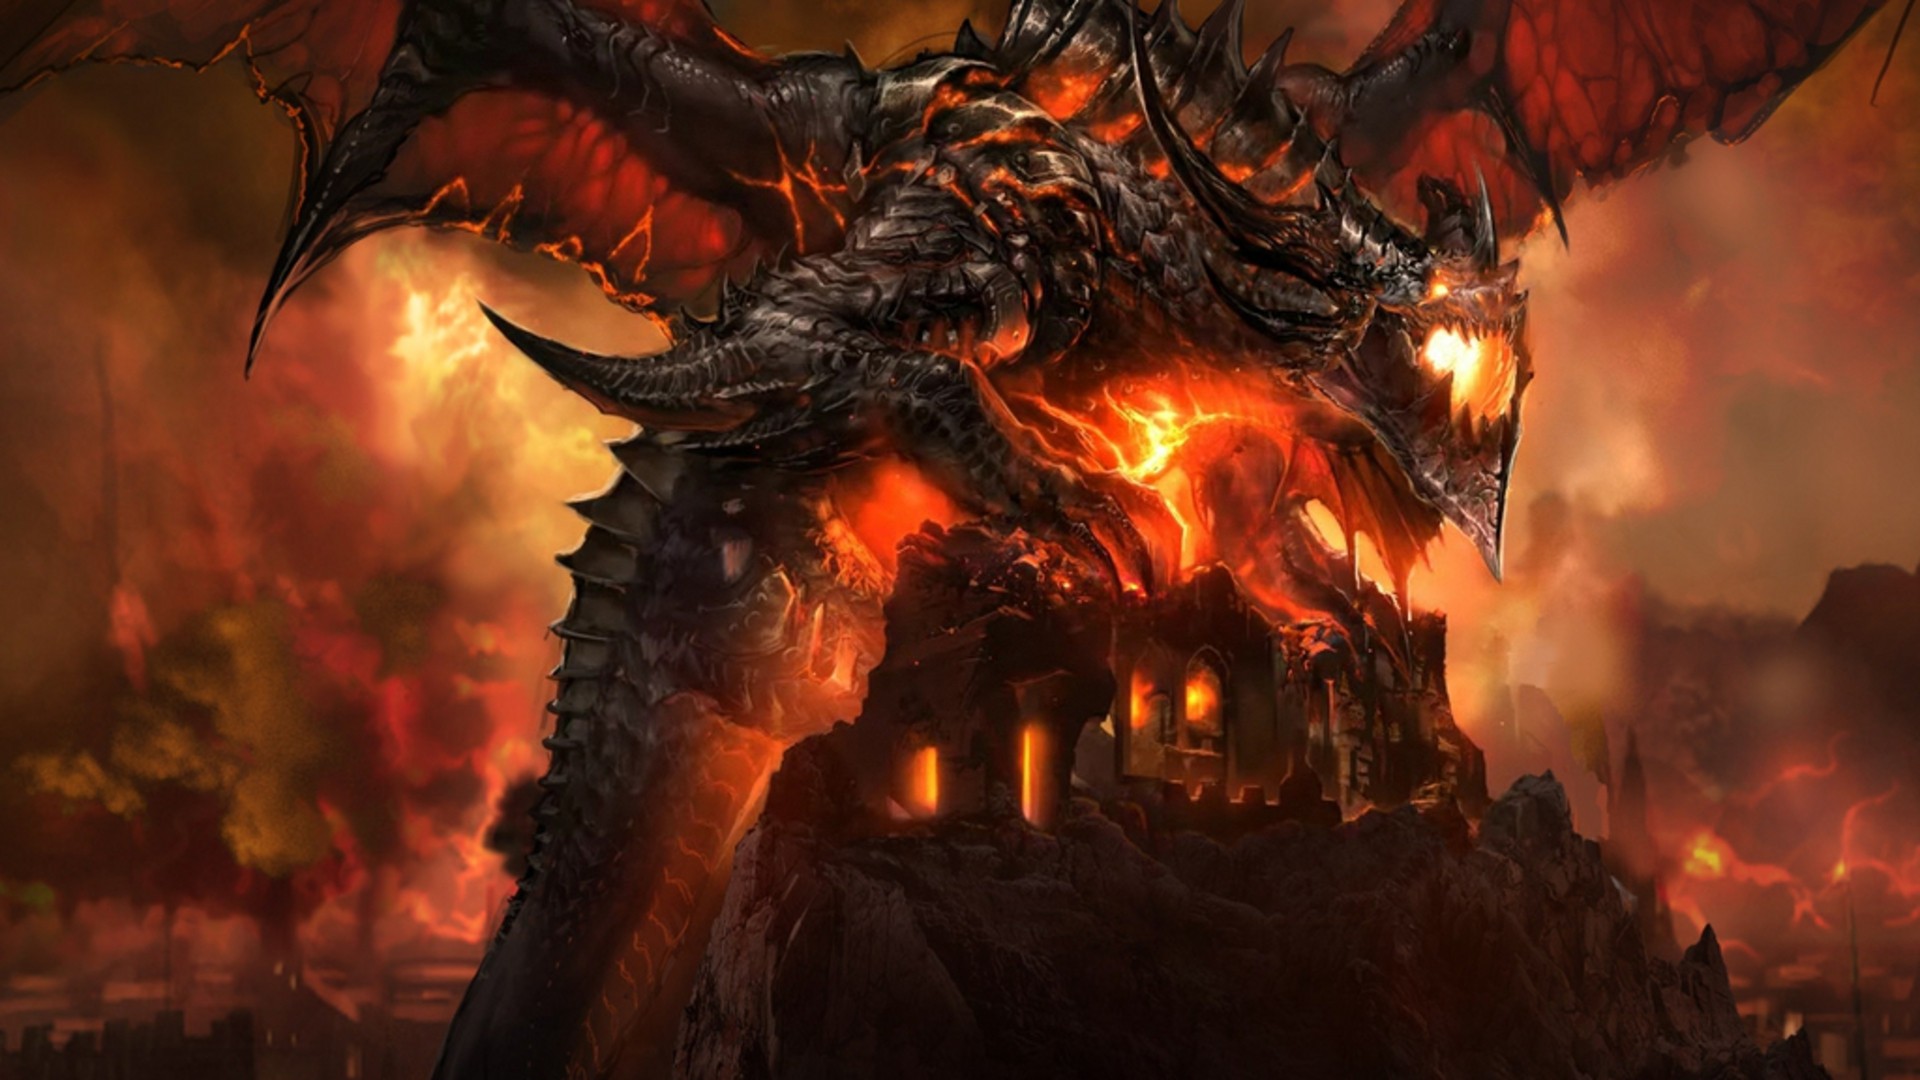 melhores wallpapers hd para pc,action adventure game,dragon,flame,demon,cg artwork